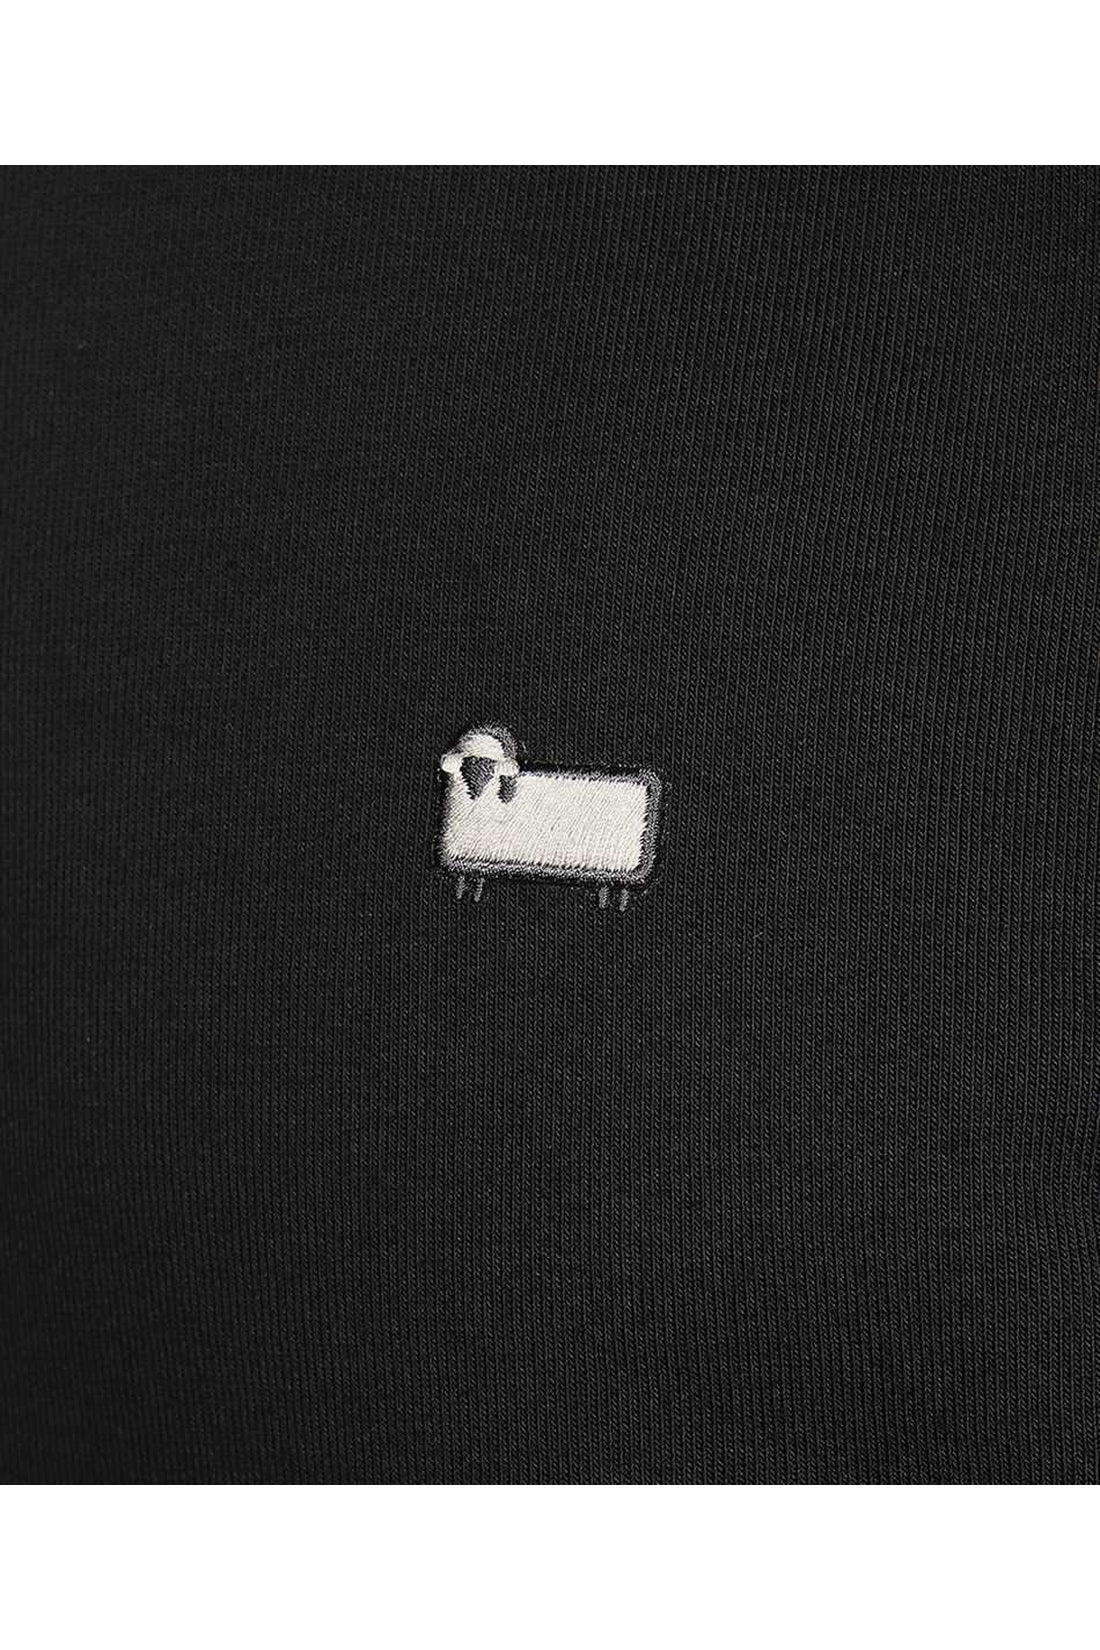 Woolrich-OUTLET-SALE-Embroidered logo crew-neck sweatshirt-ARCHIVIST